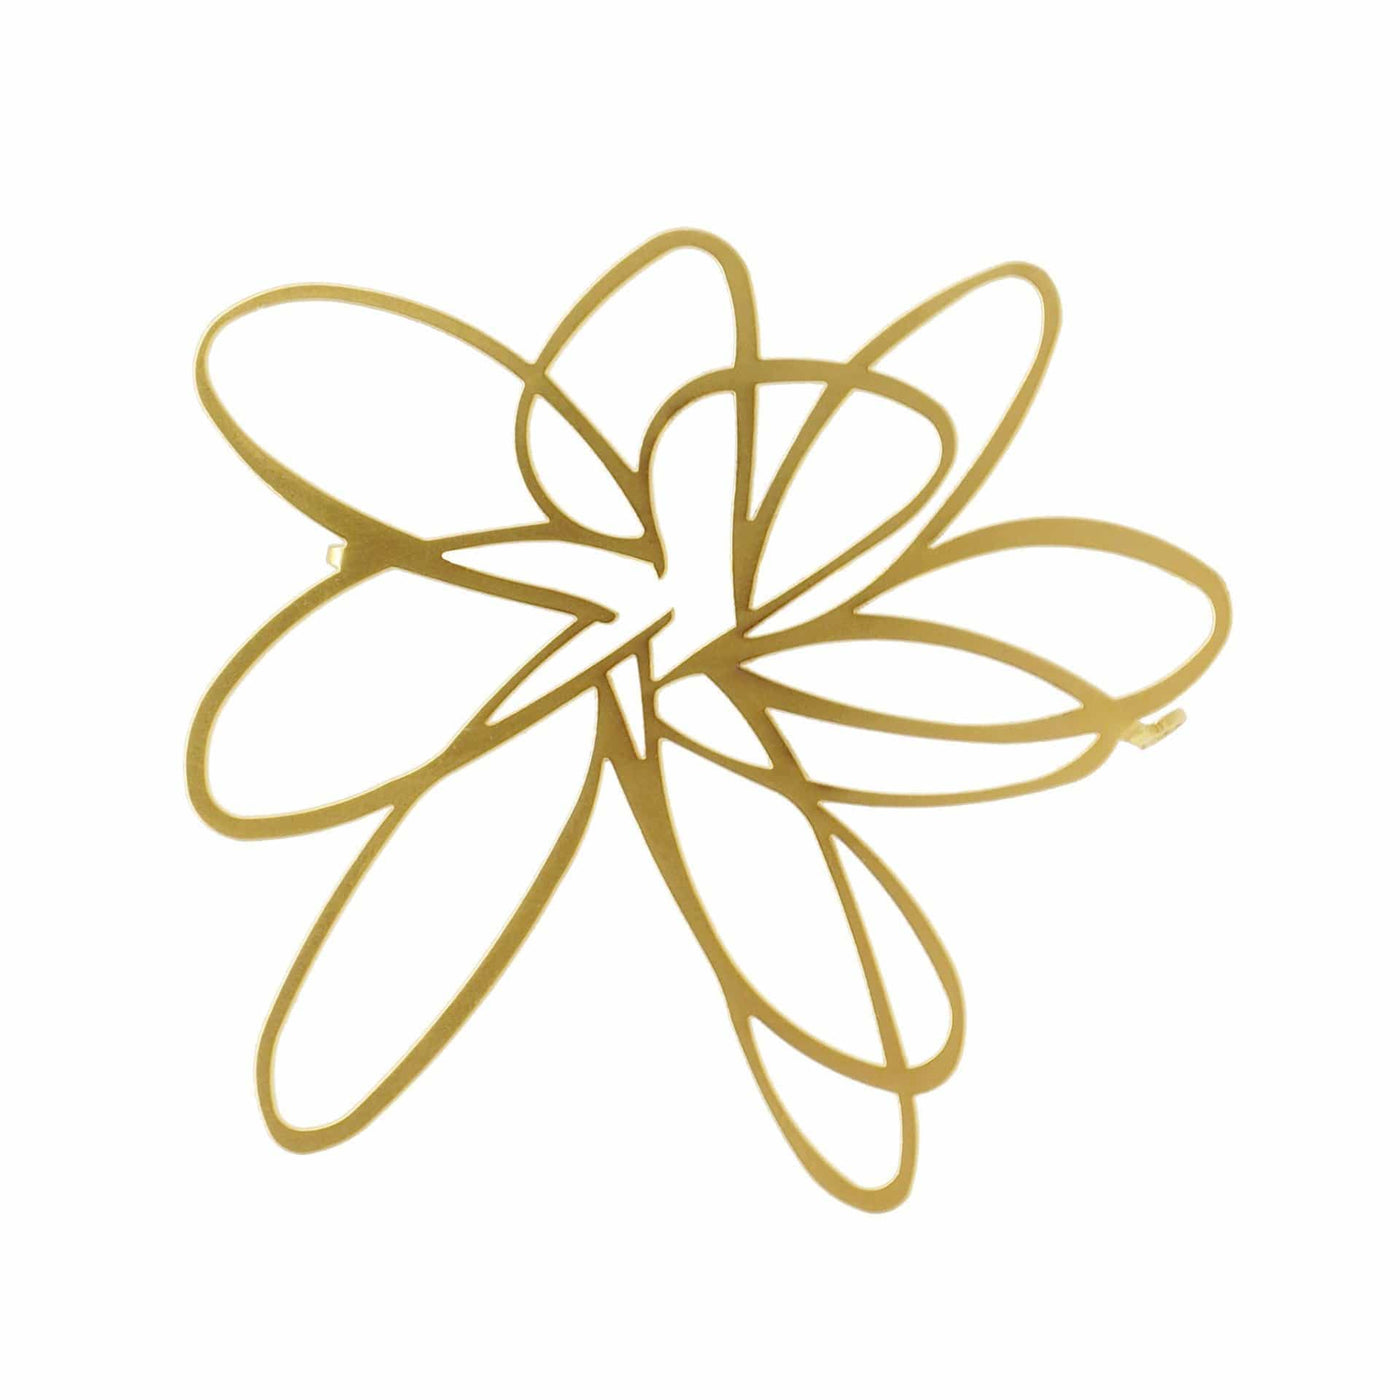 Flower Brooch - 22ct Matt Gold Plate - inSync design